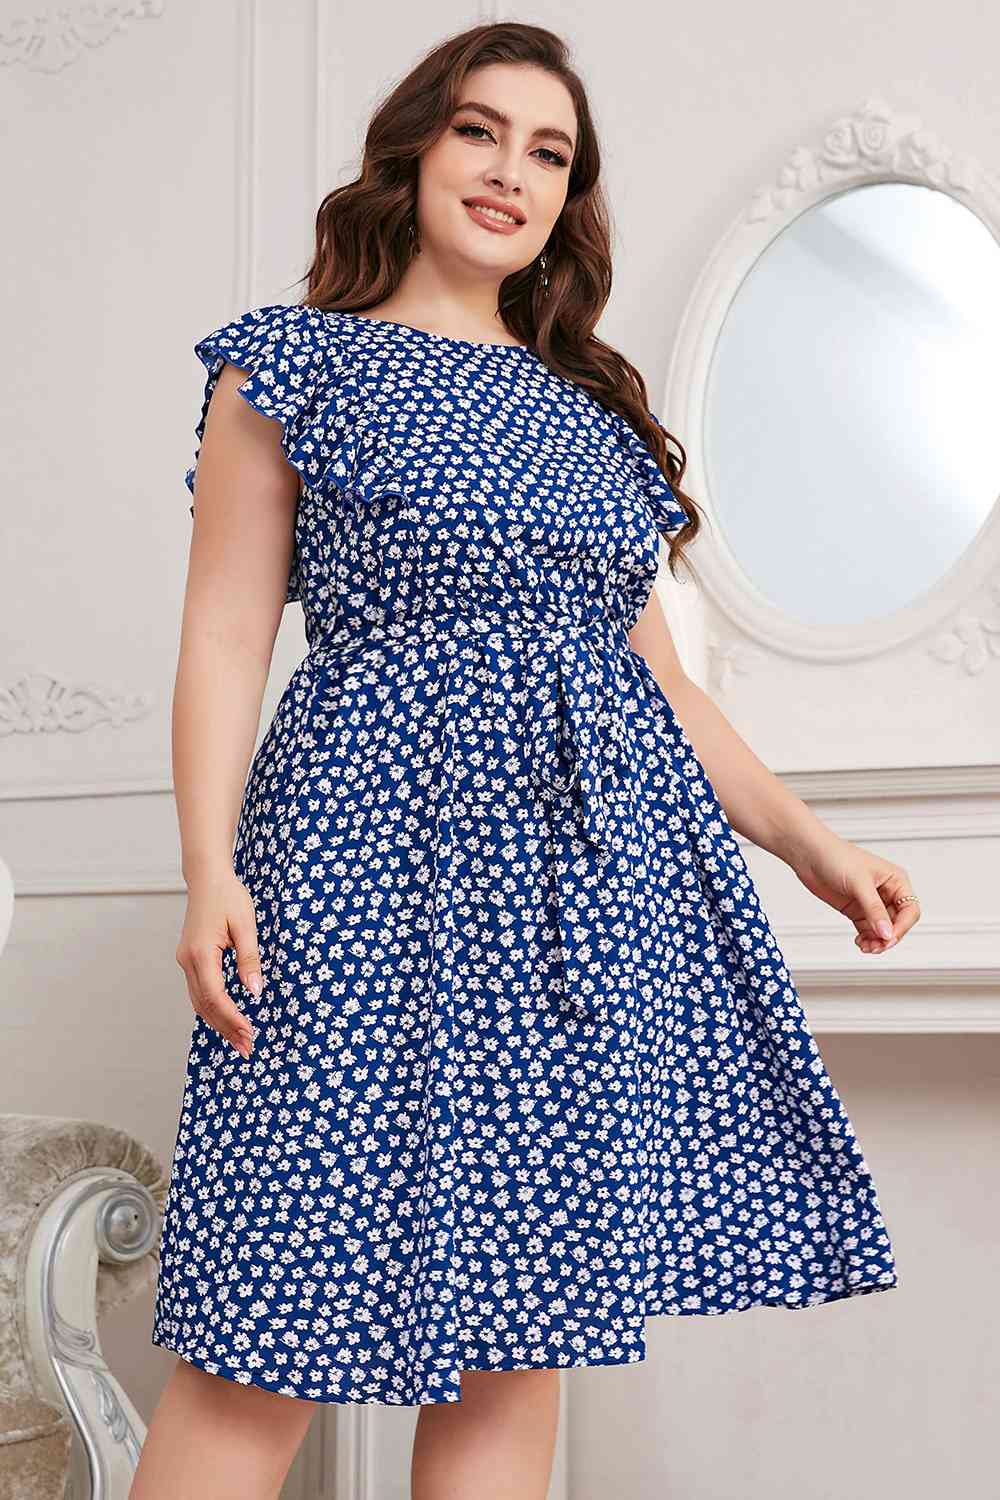 TEEK - Cobalt Blue Plus Size Tie Waist Dress DRESS TEEK Trend   